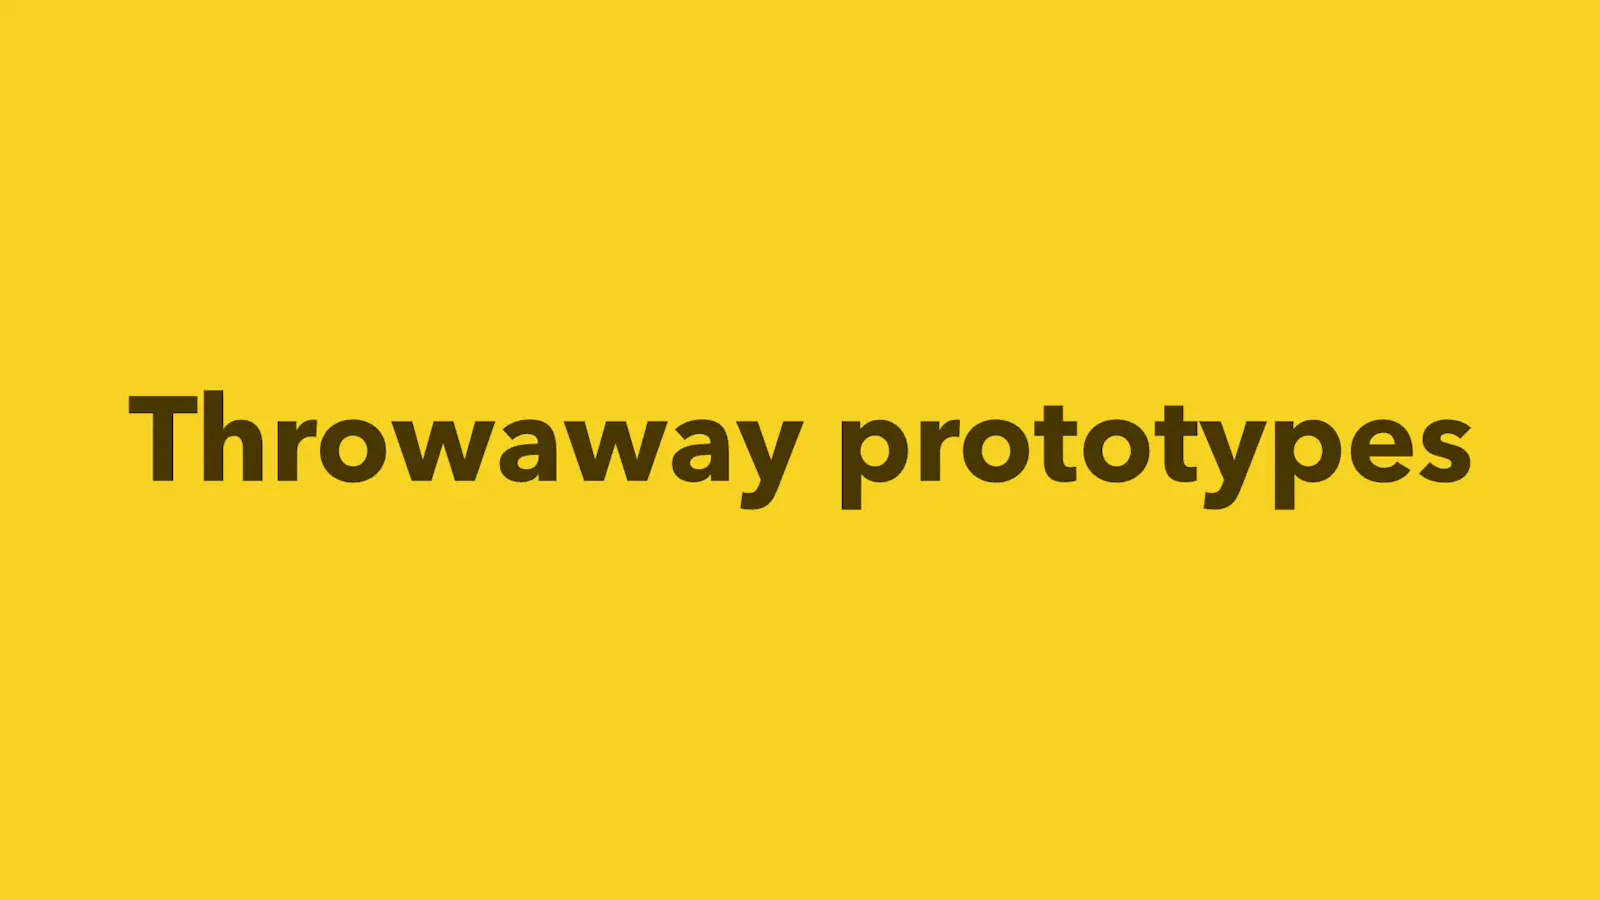 Throwaway prototypes